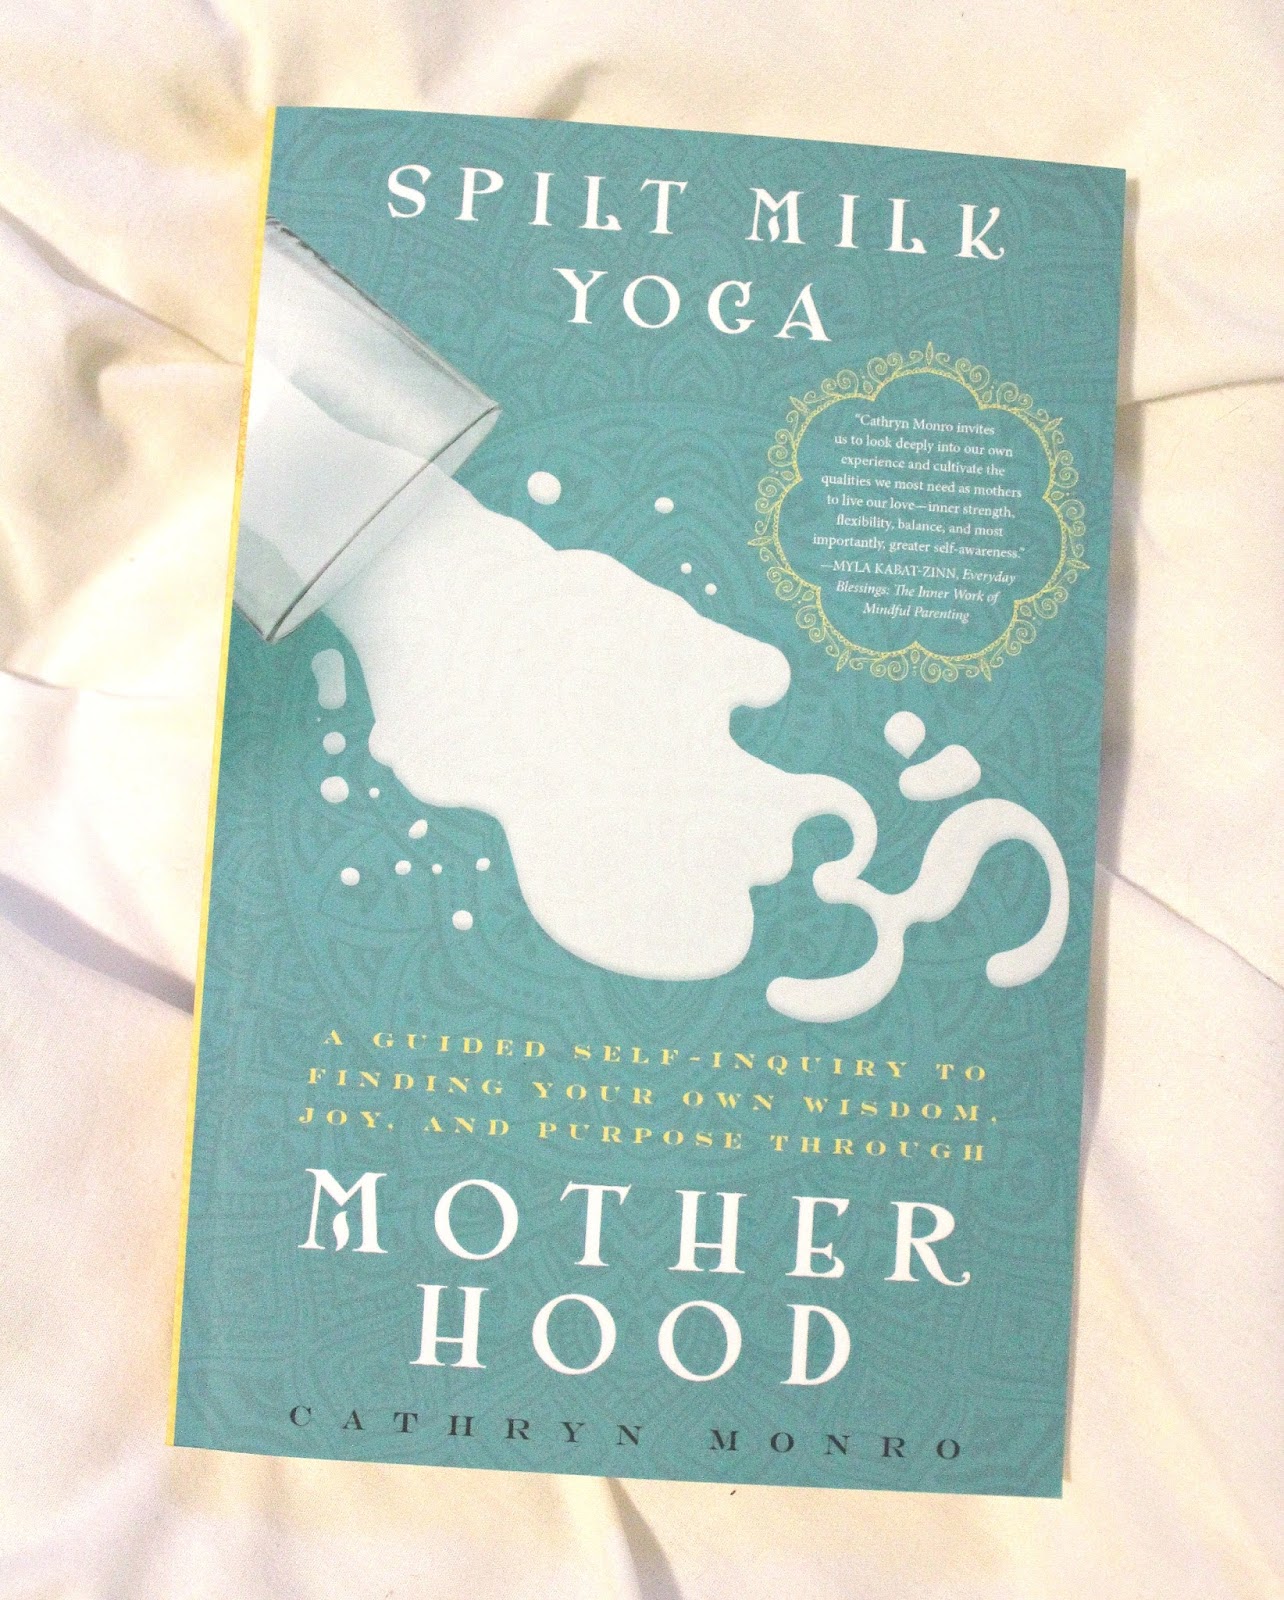 Spilt Milk Yoga Book Review